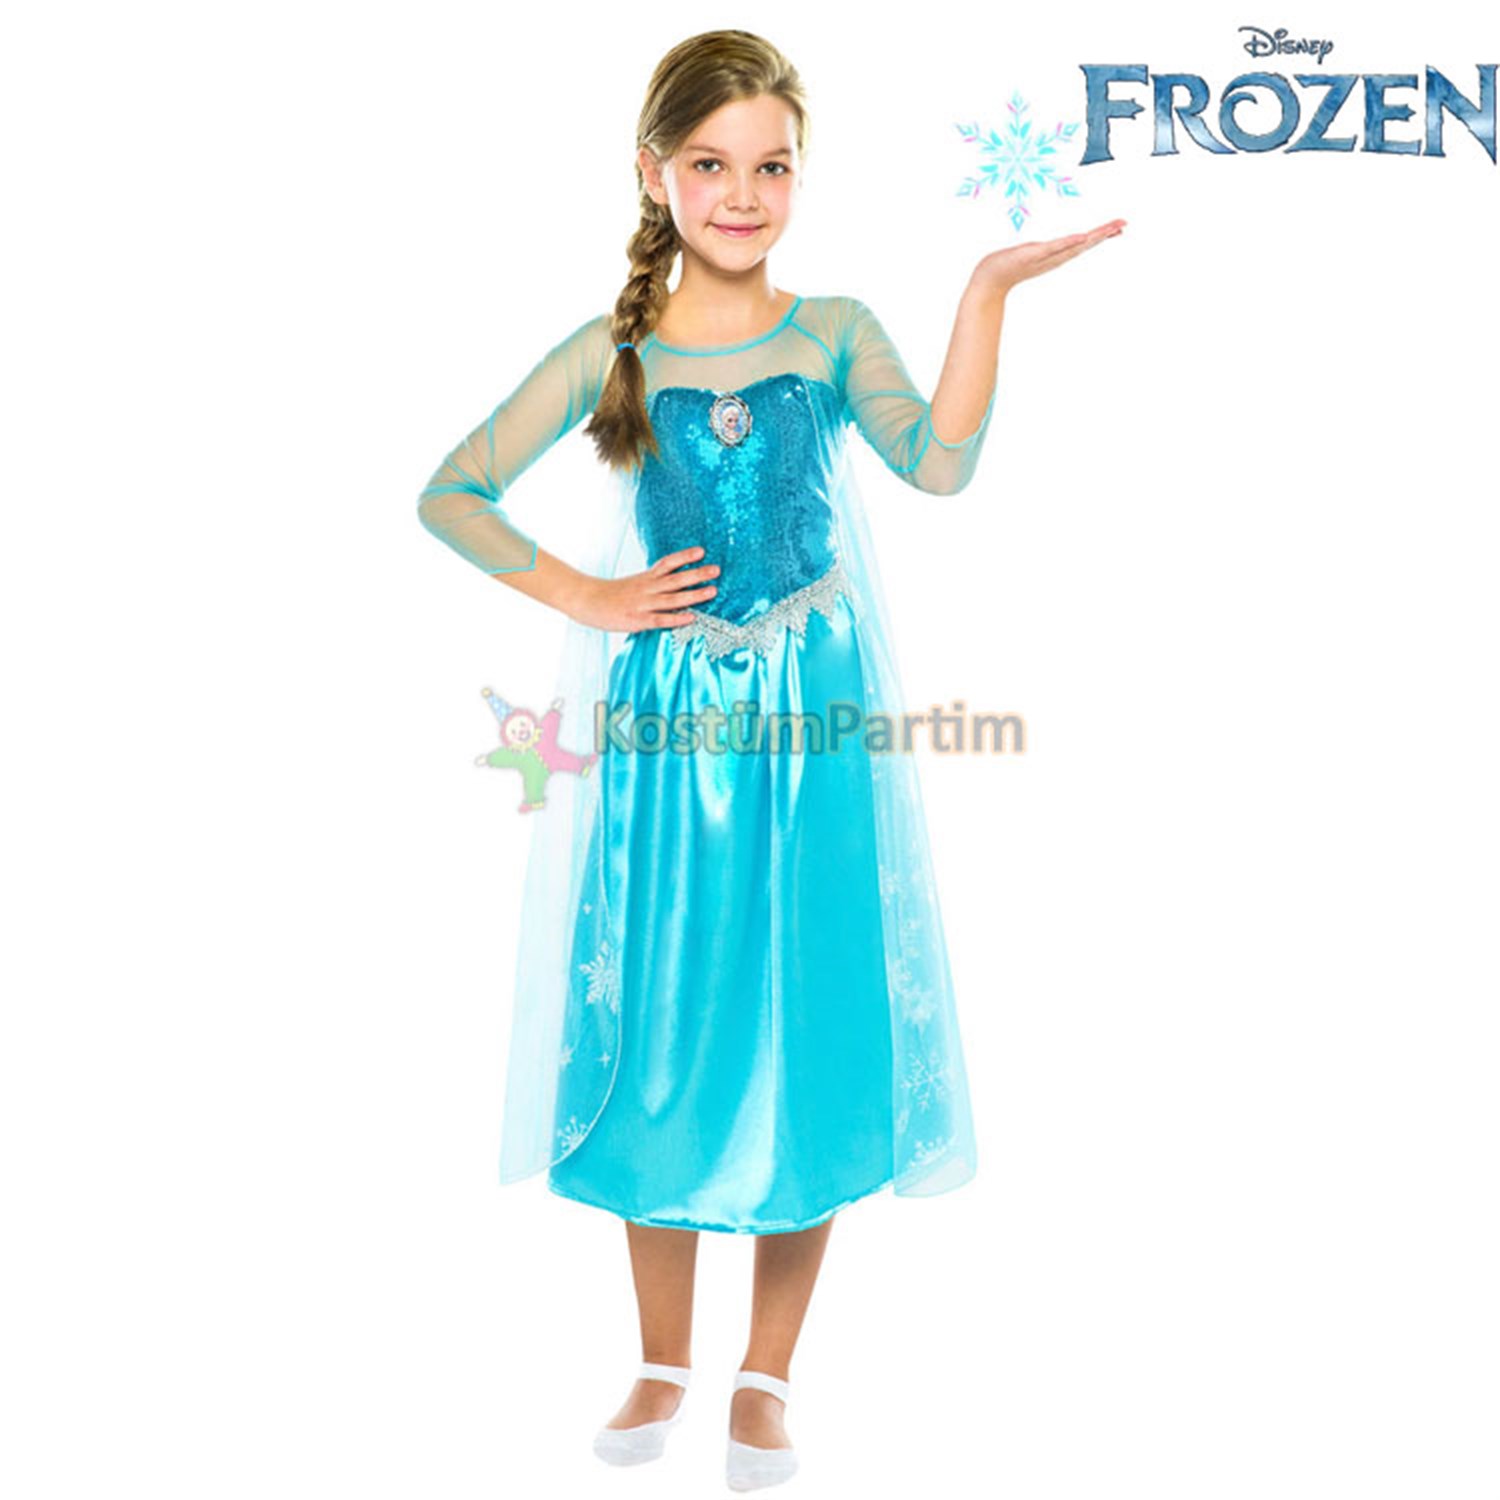 Kostumpartim Disney Frozen Elsa Kostumu Rozetli Disney Lisansli Karakter Kostumleri